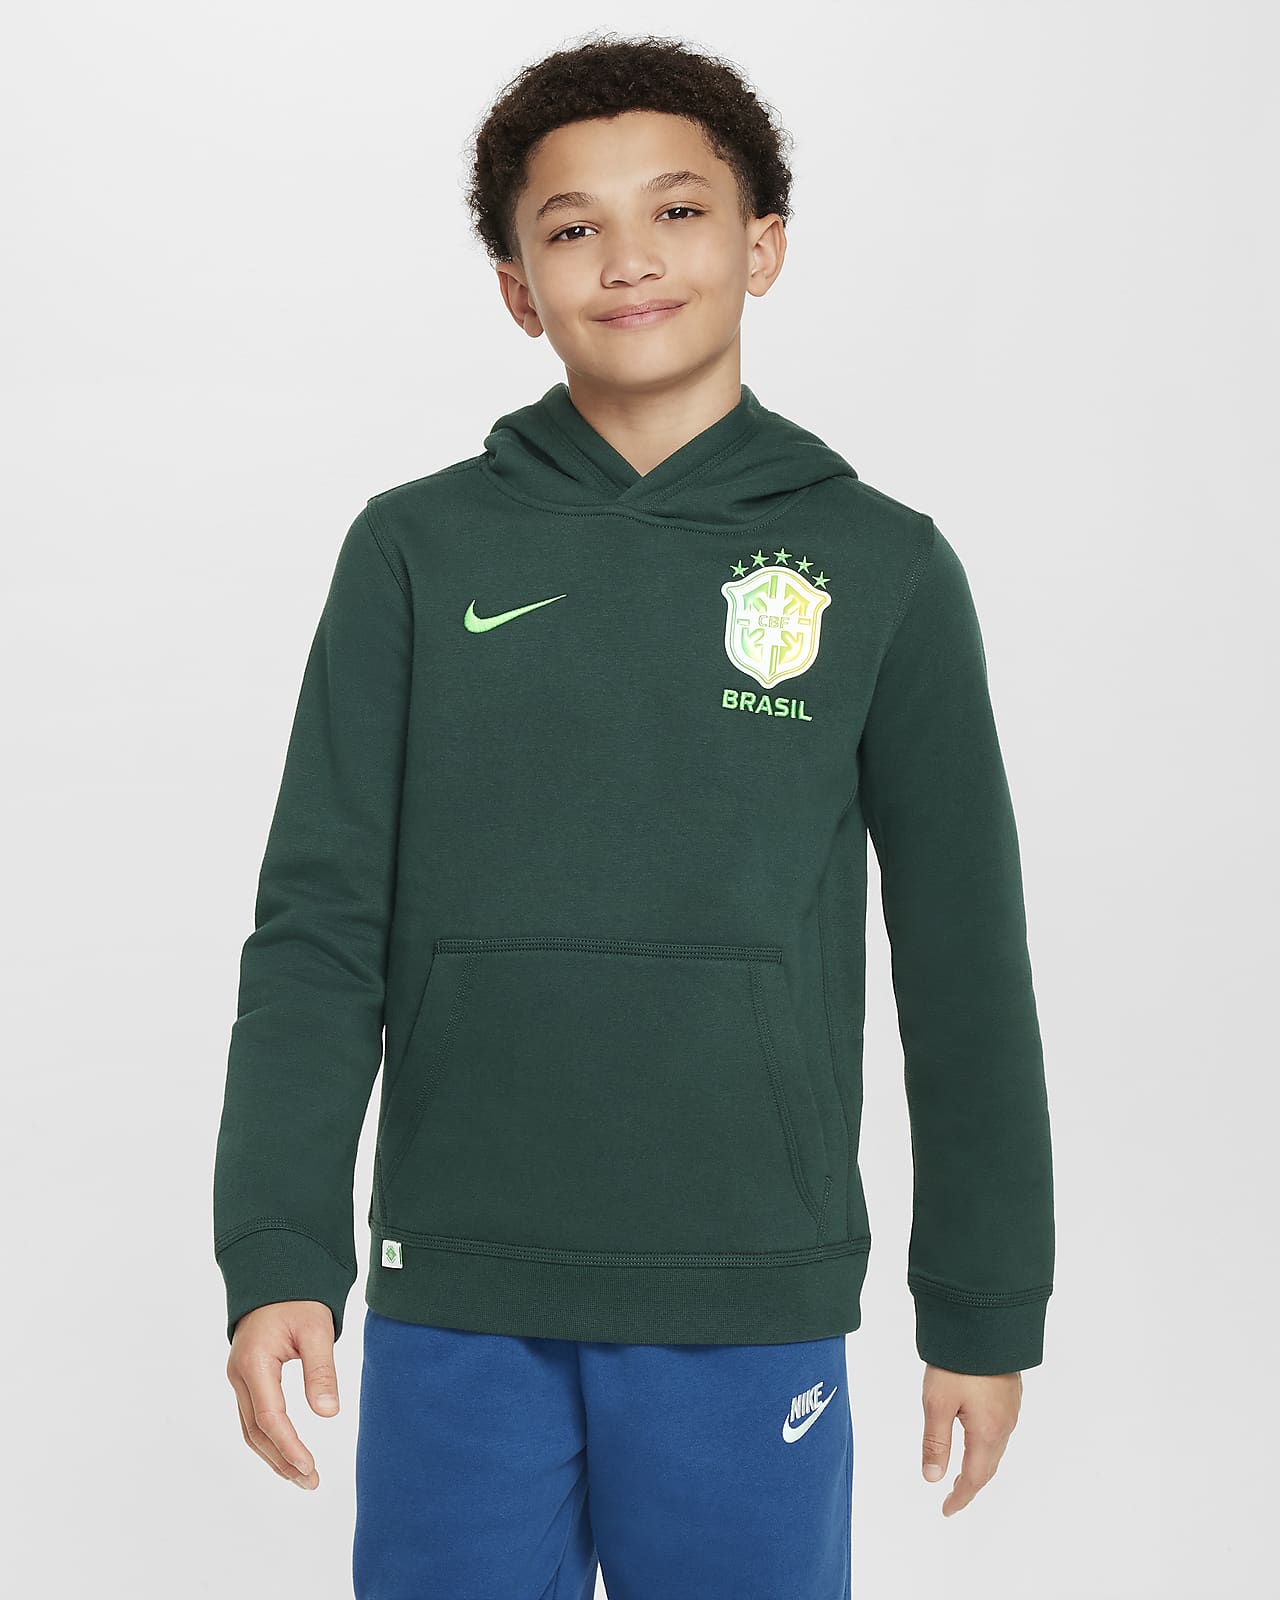 Brazil Club Big Kids' (Boys') Nike Soccer Pullover Hoodie